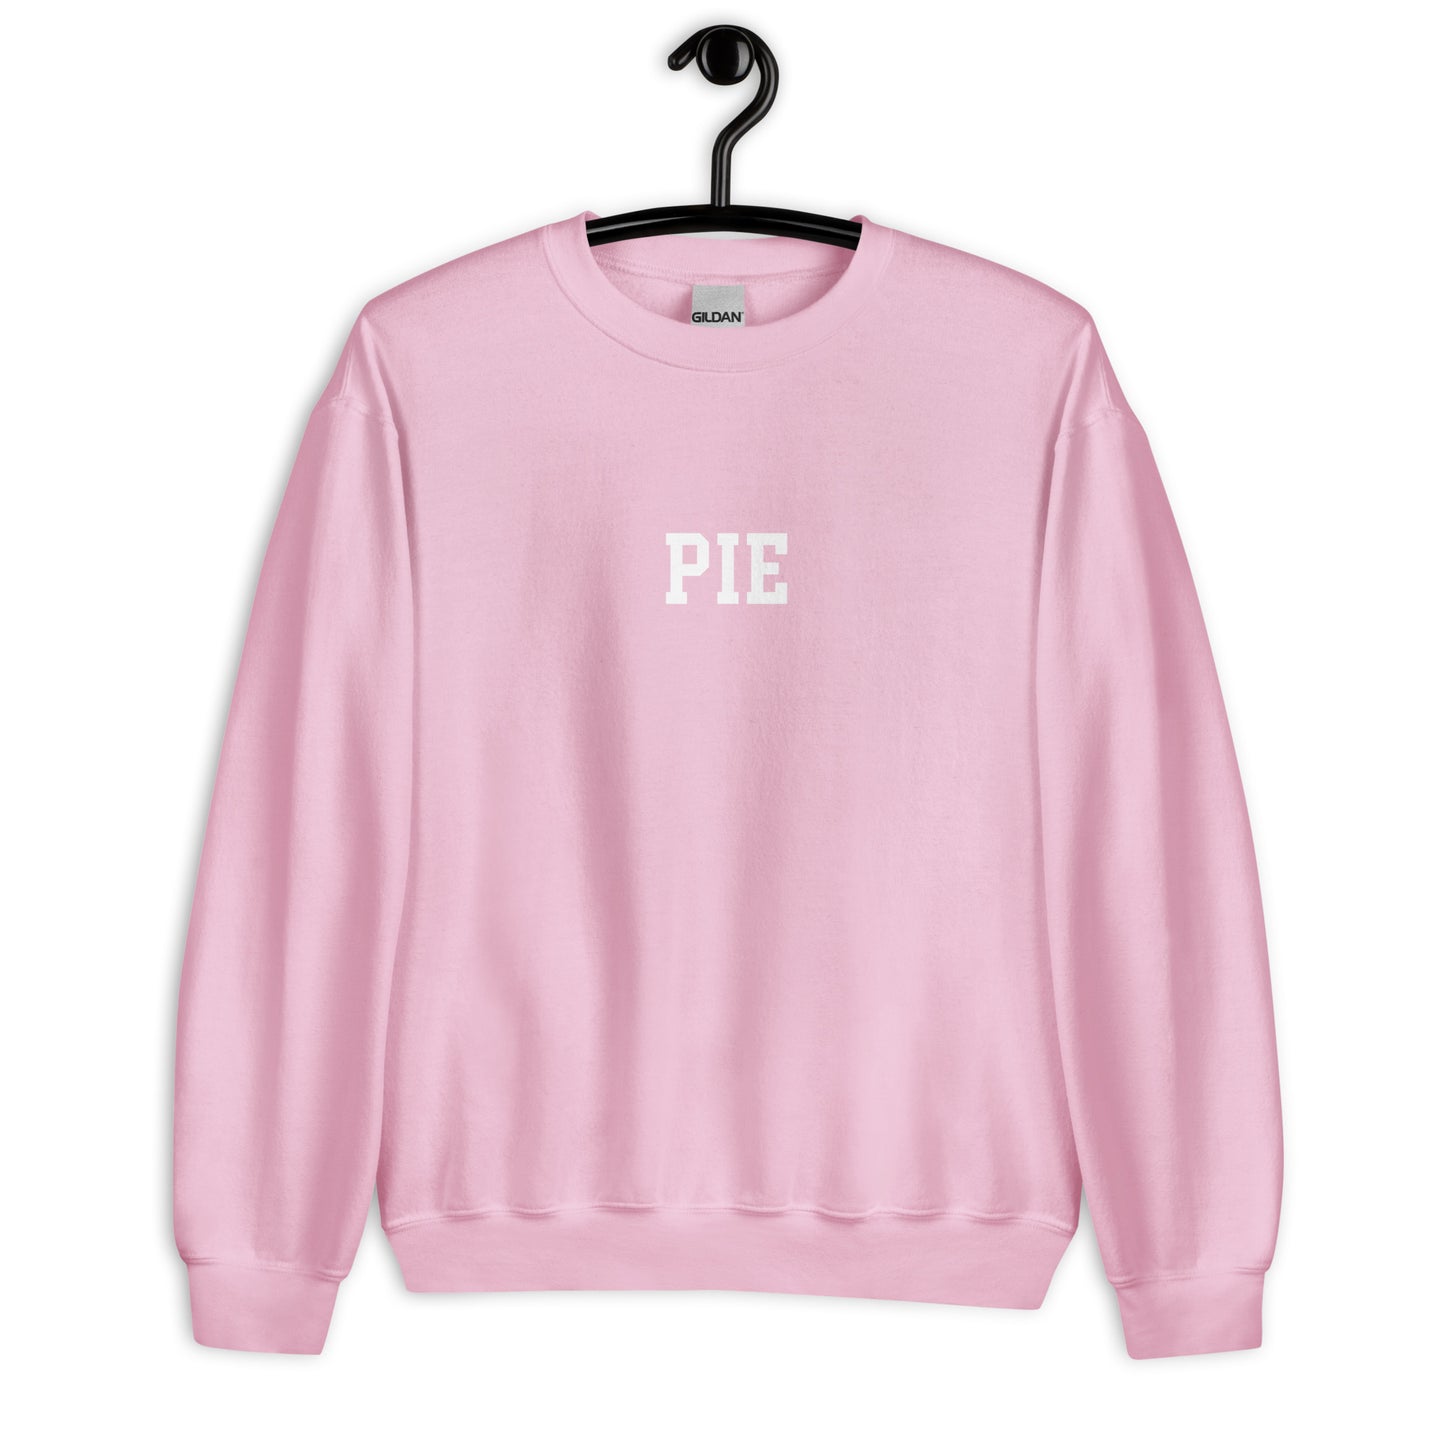 Pie Sweatshirt - Straight Font